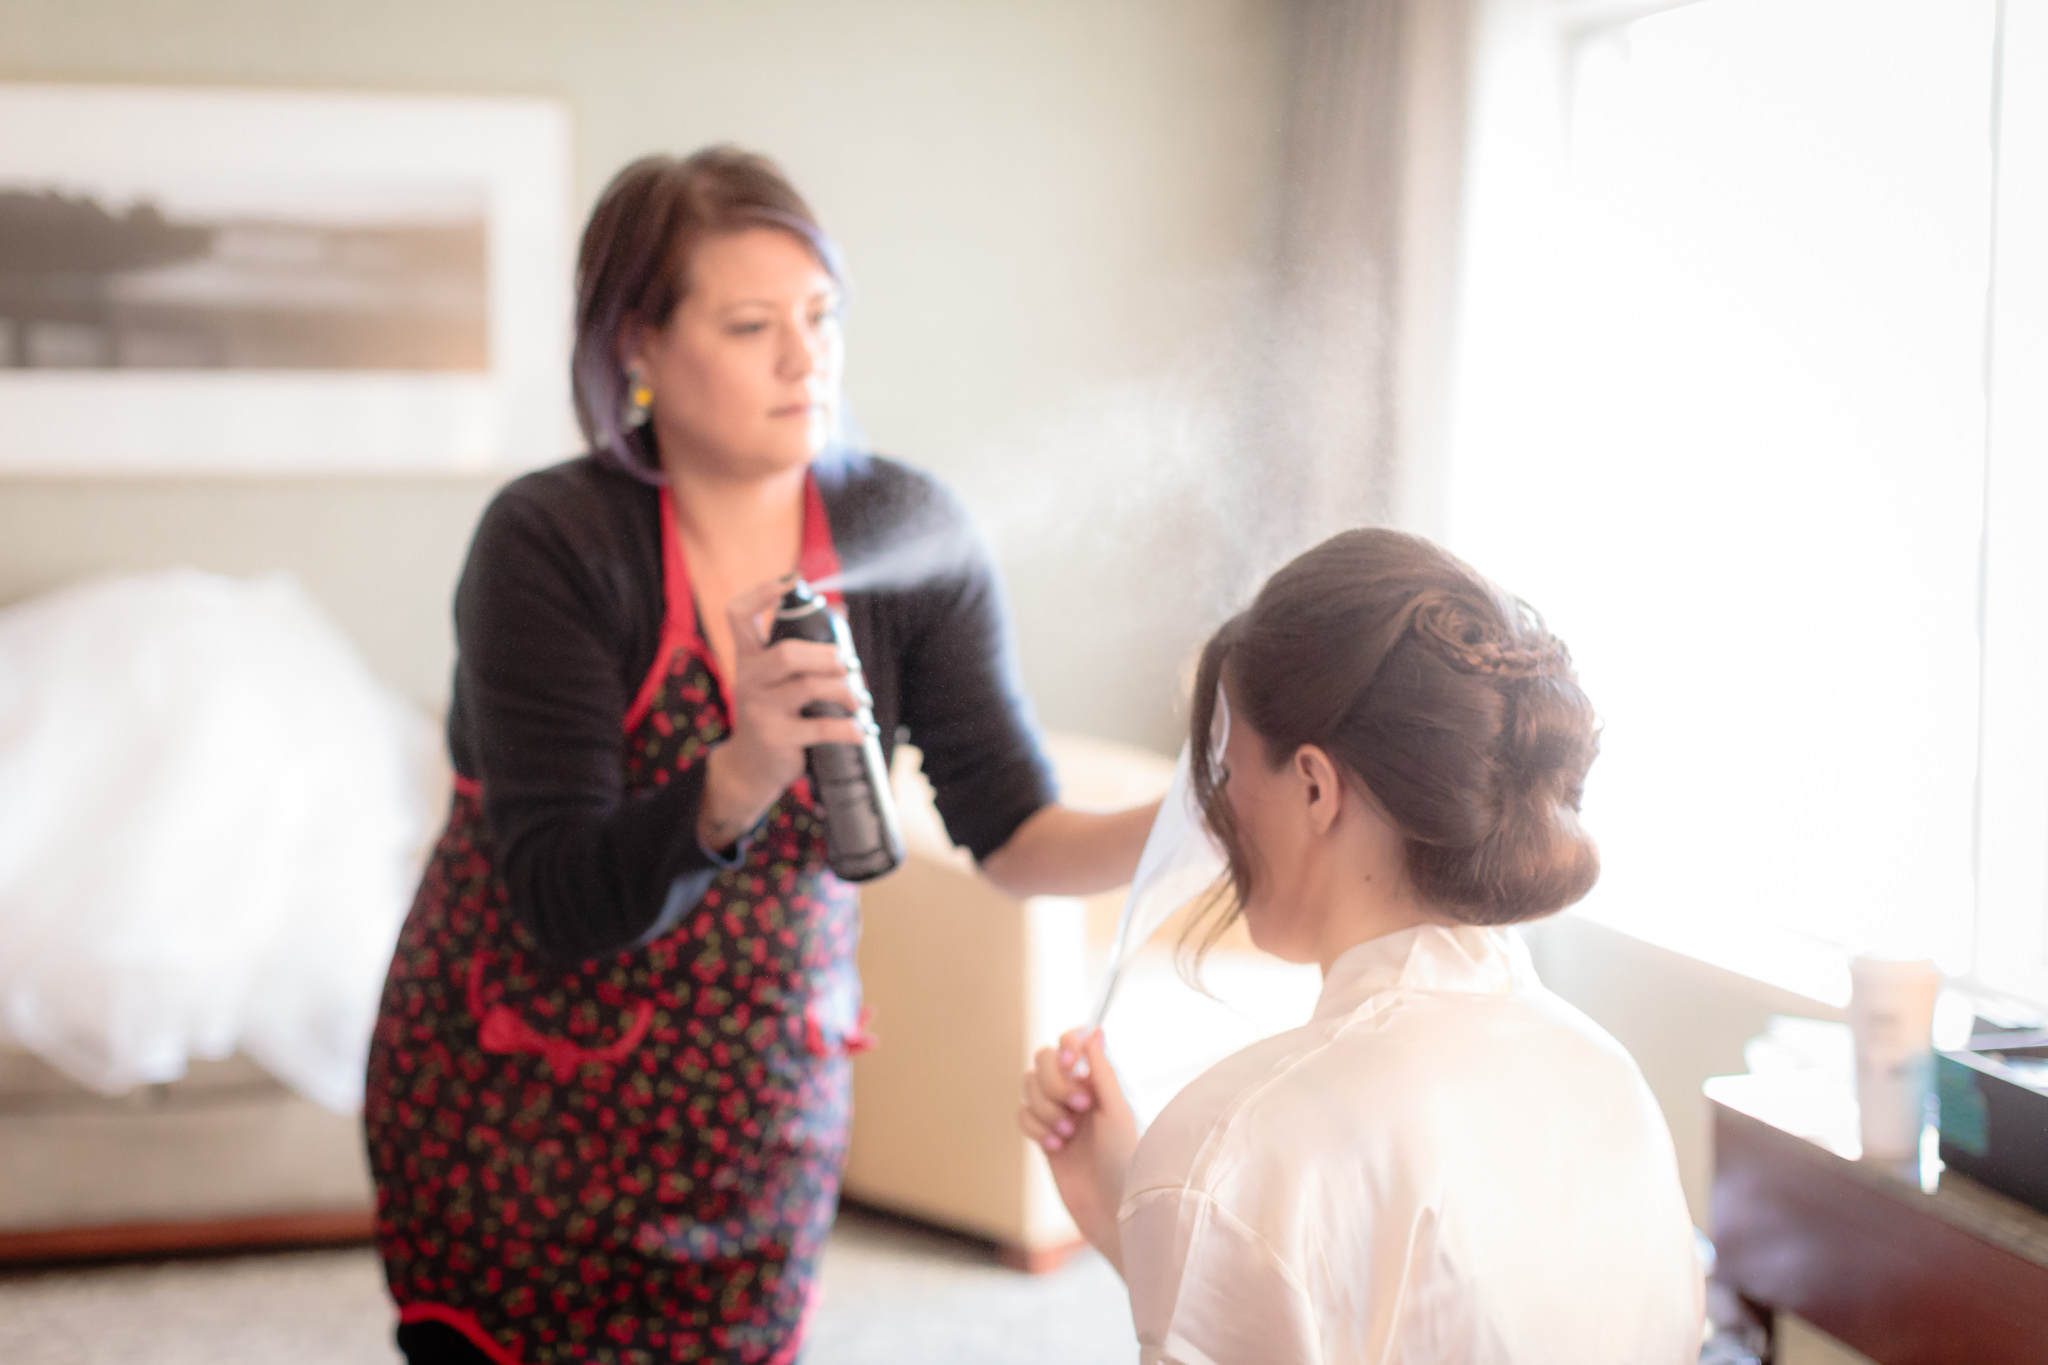 Hair stylist from Salon Nolas sprays the bride's updo